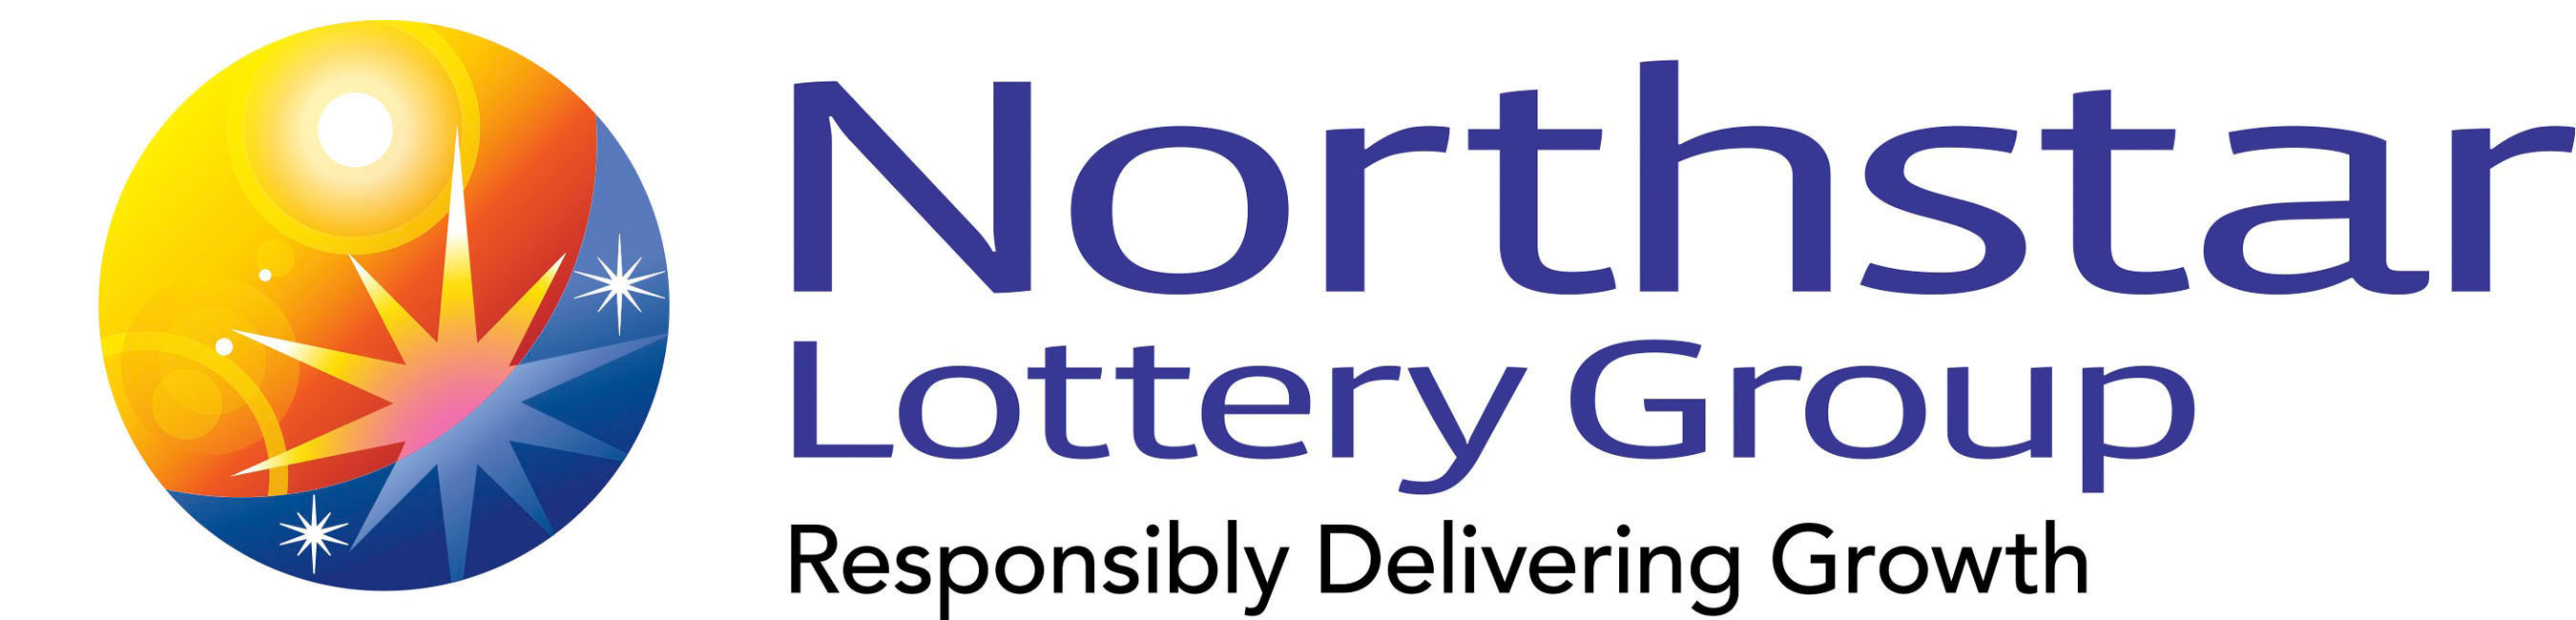 Northstar Lottery Group Logo. (PRNewsFoto/Northstar Lottery Group) (PRNewsFoto/)